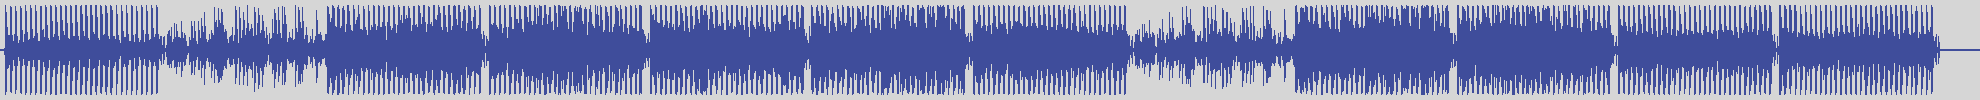 nf_boyz_records [NFY058] Jack, Jeff - Aerosmith [Original Mix] audio wave form